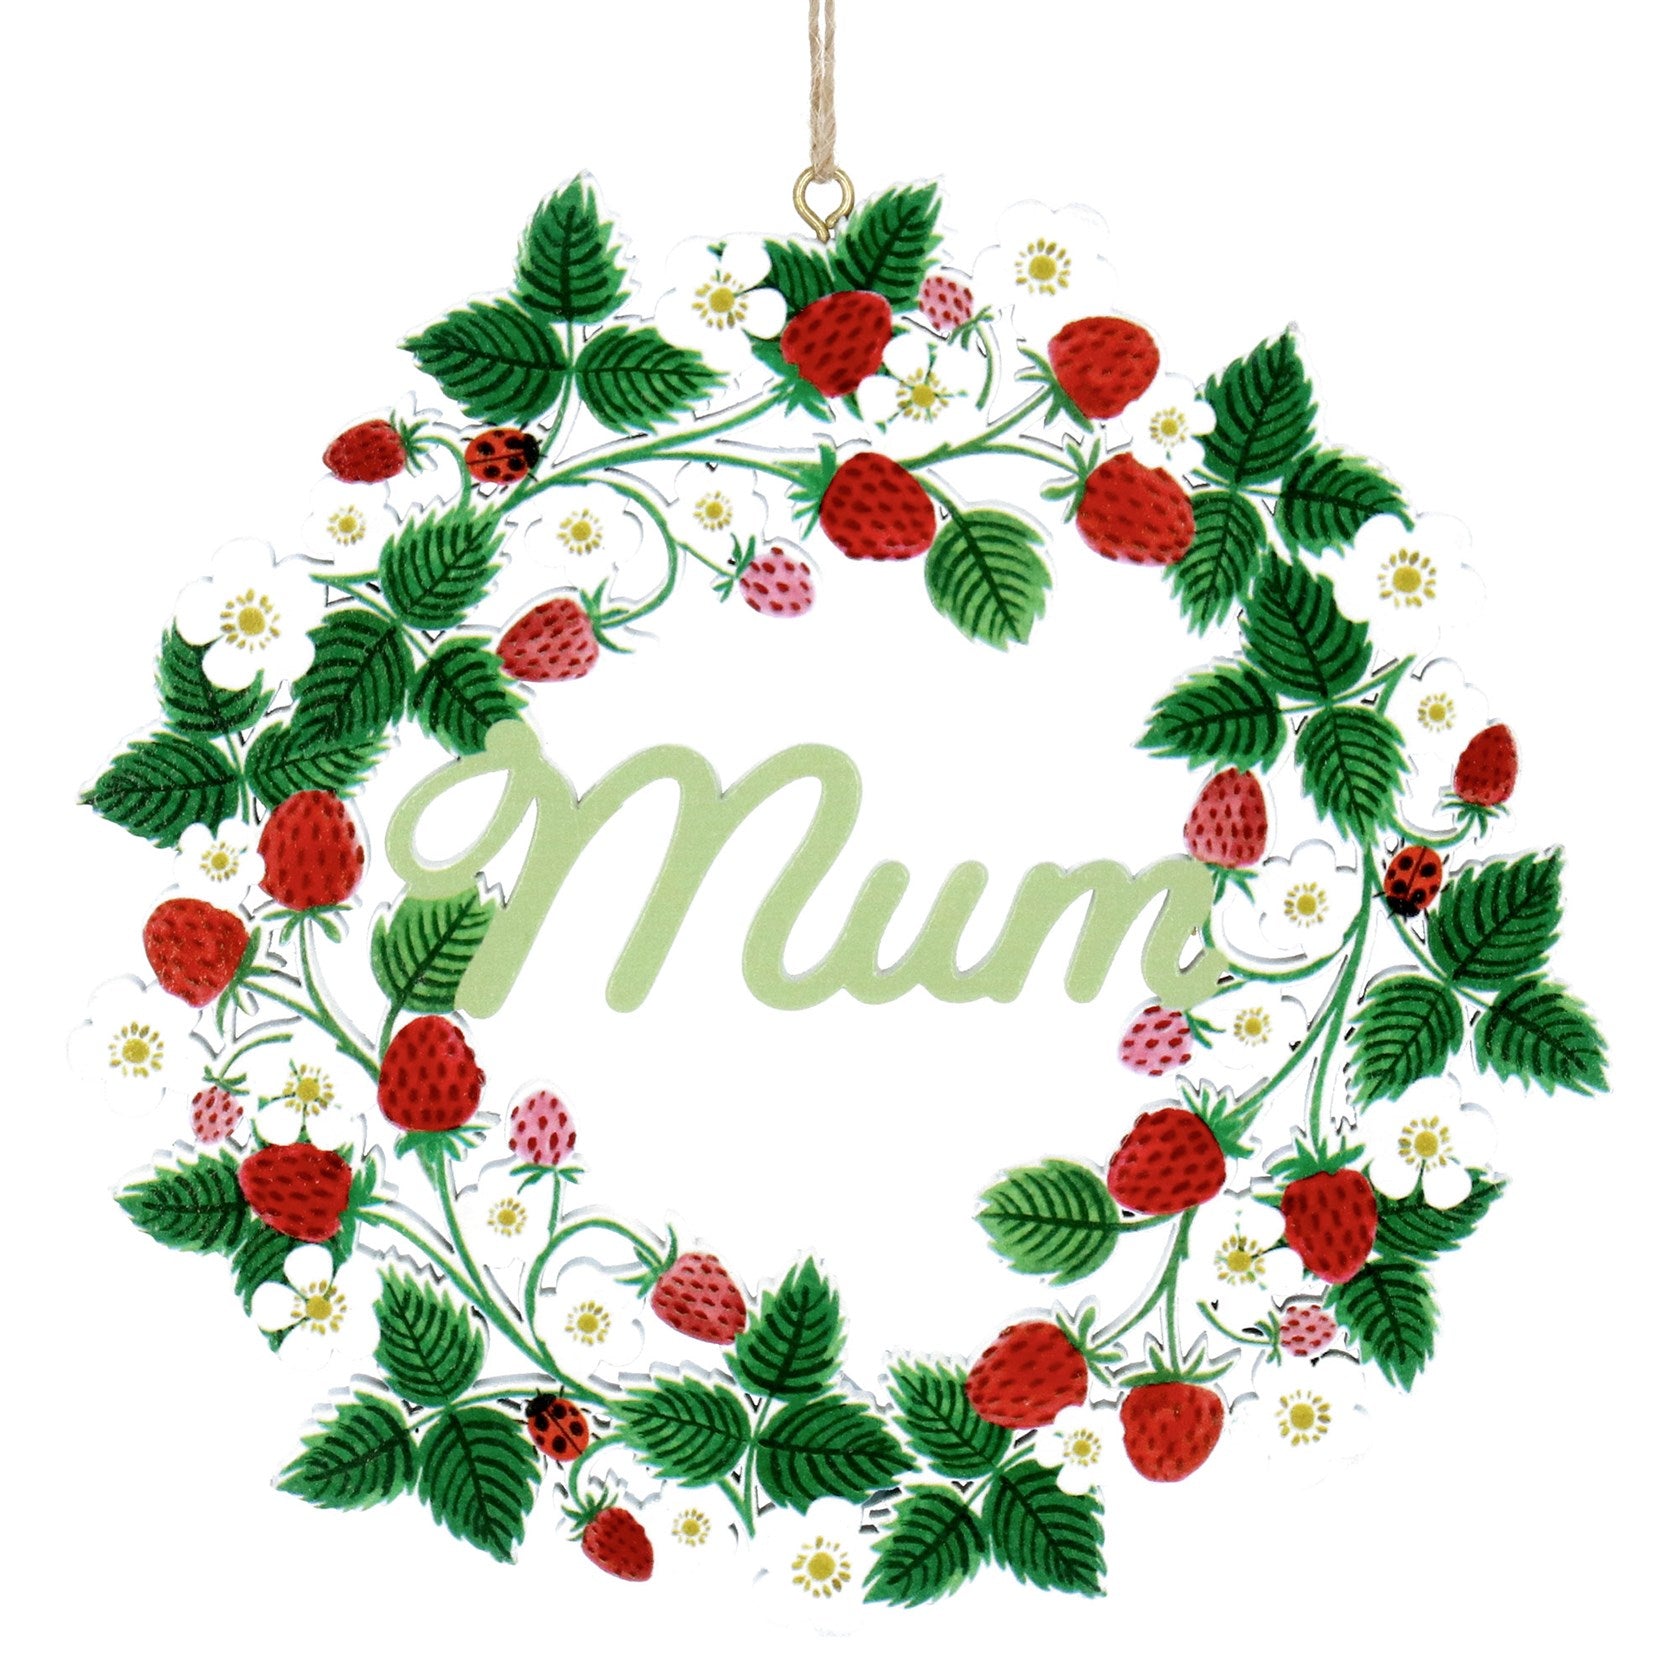 Wooden Mini 'Mum' Wreath - Strawberries